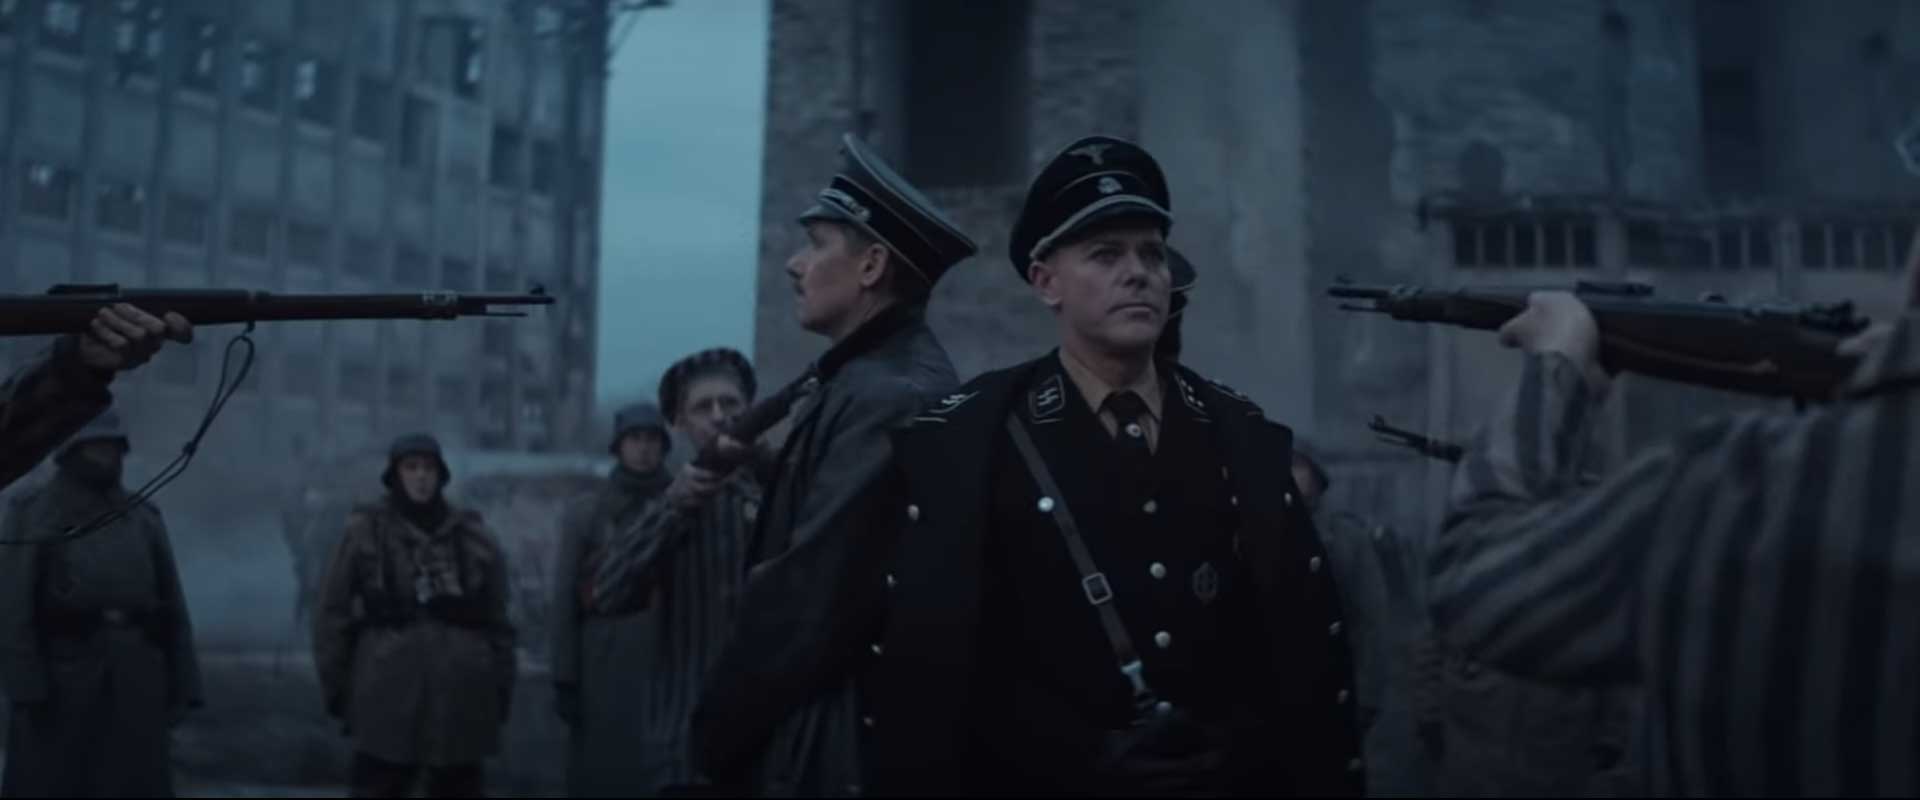 Rammstein — Deutschland смысл, значение и полный разбор клипа